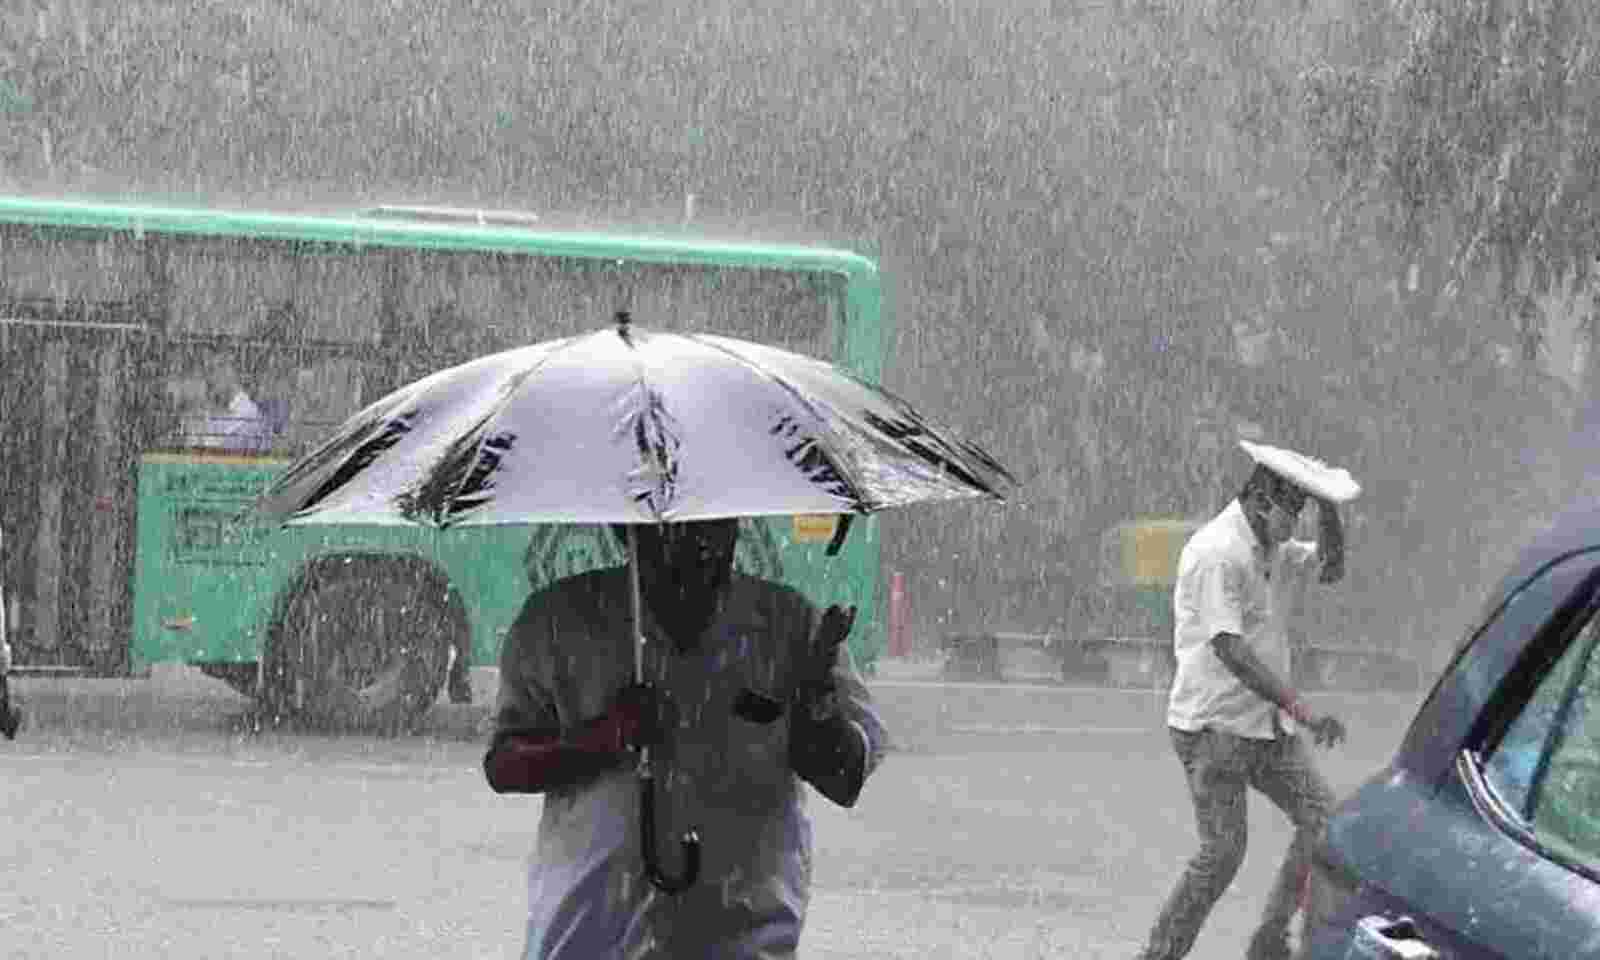 When Will It Rain In Bengaluru and the Rest of Southern Karnataka?